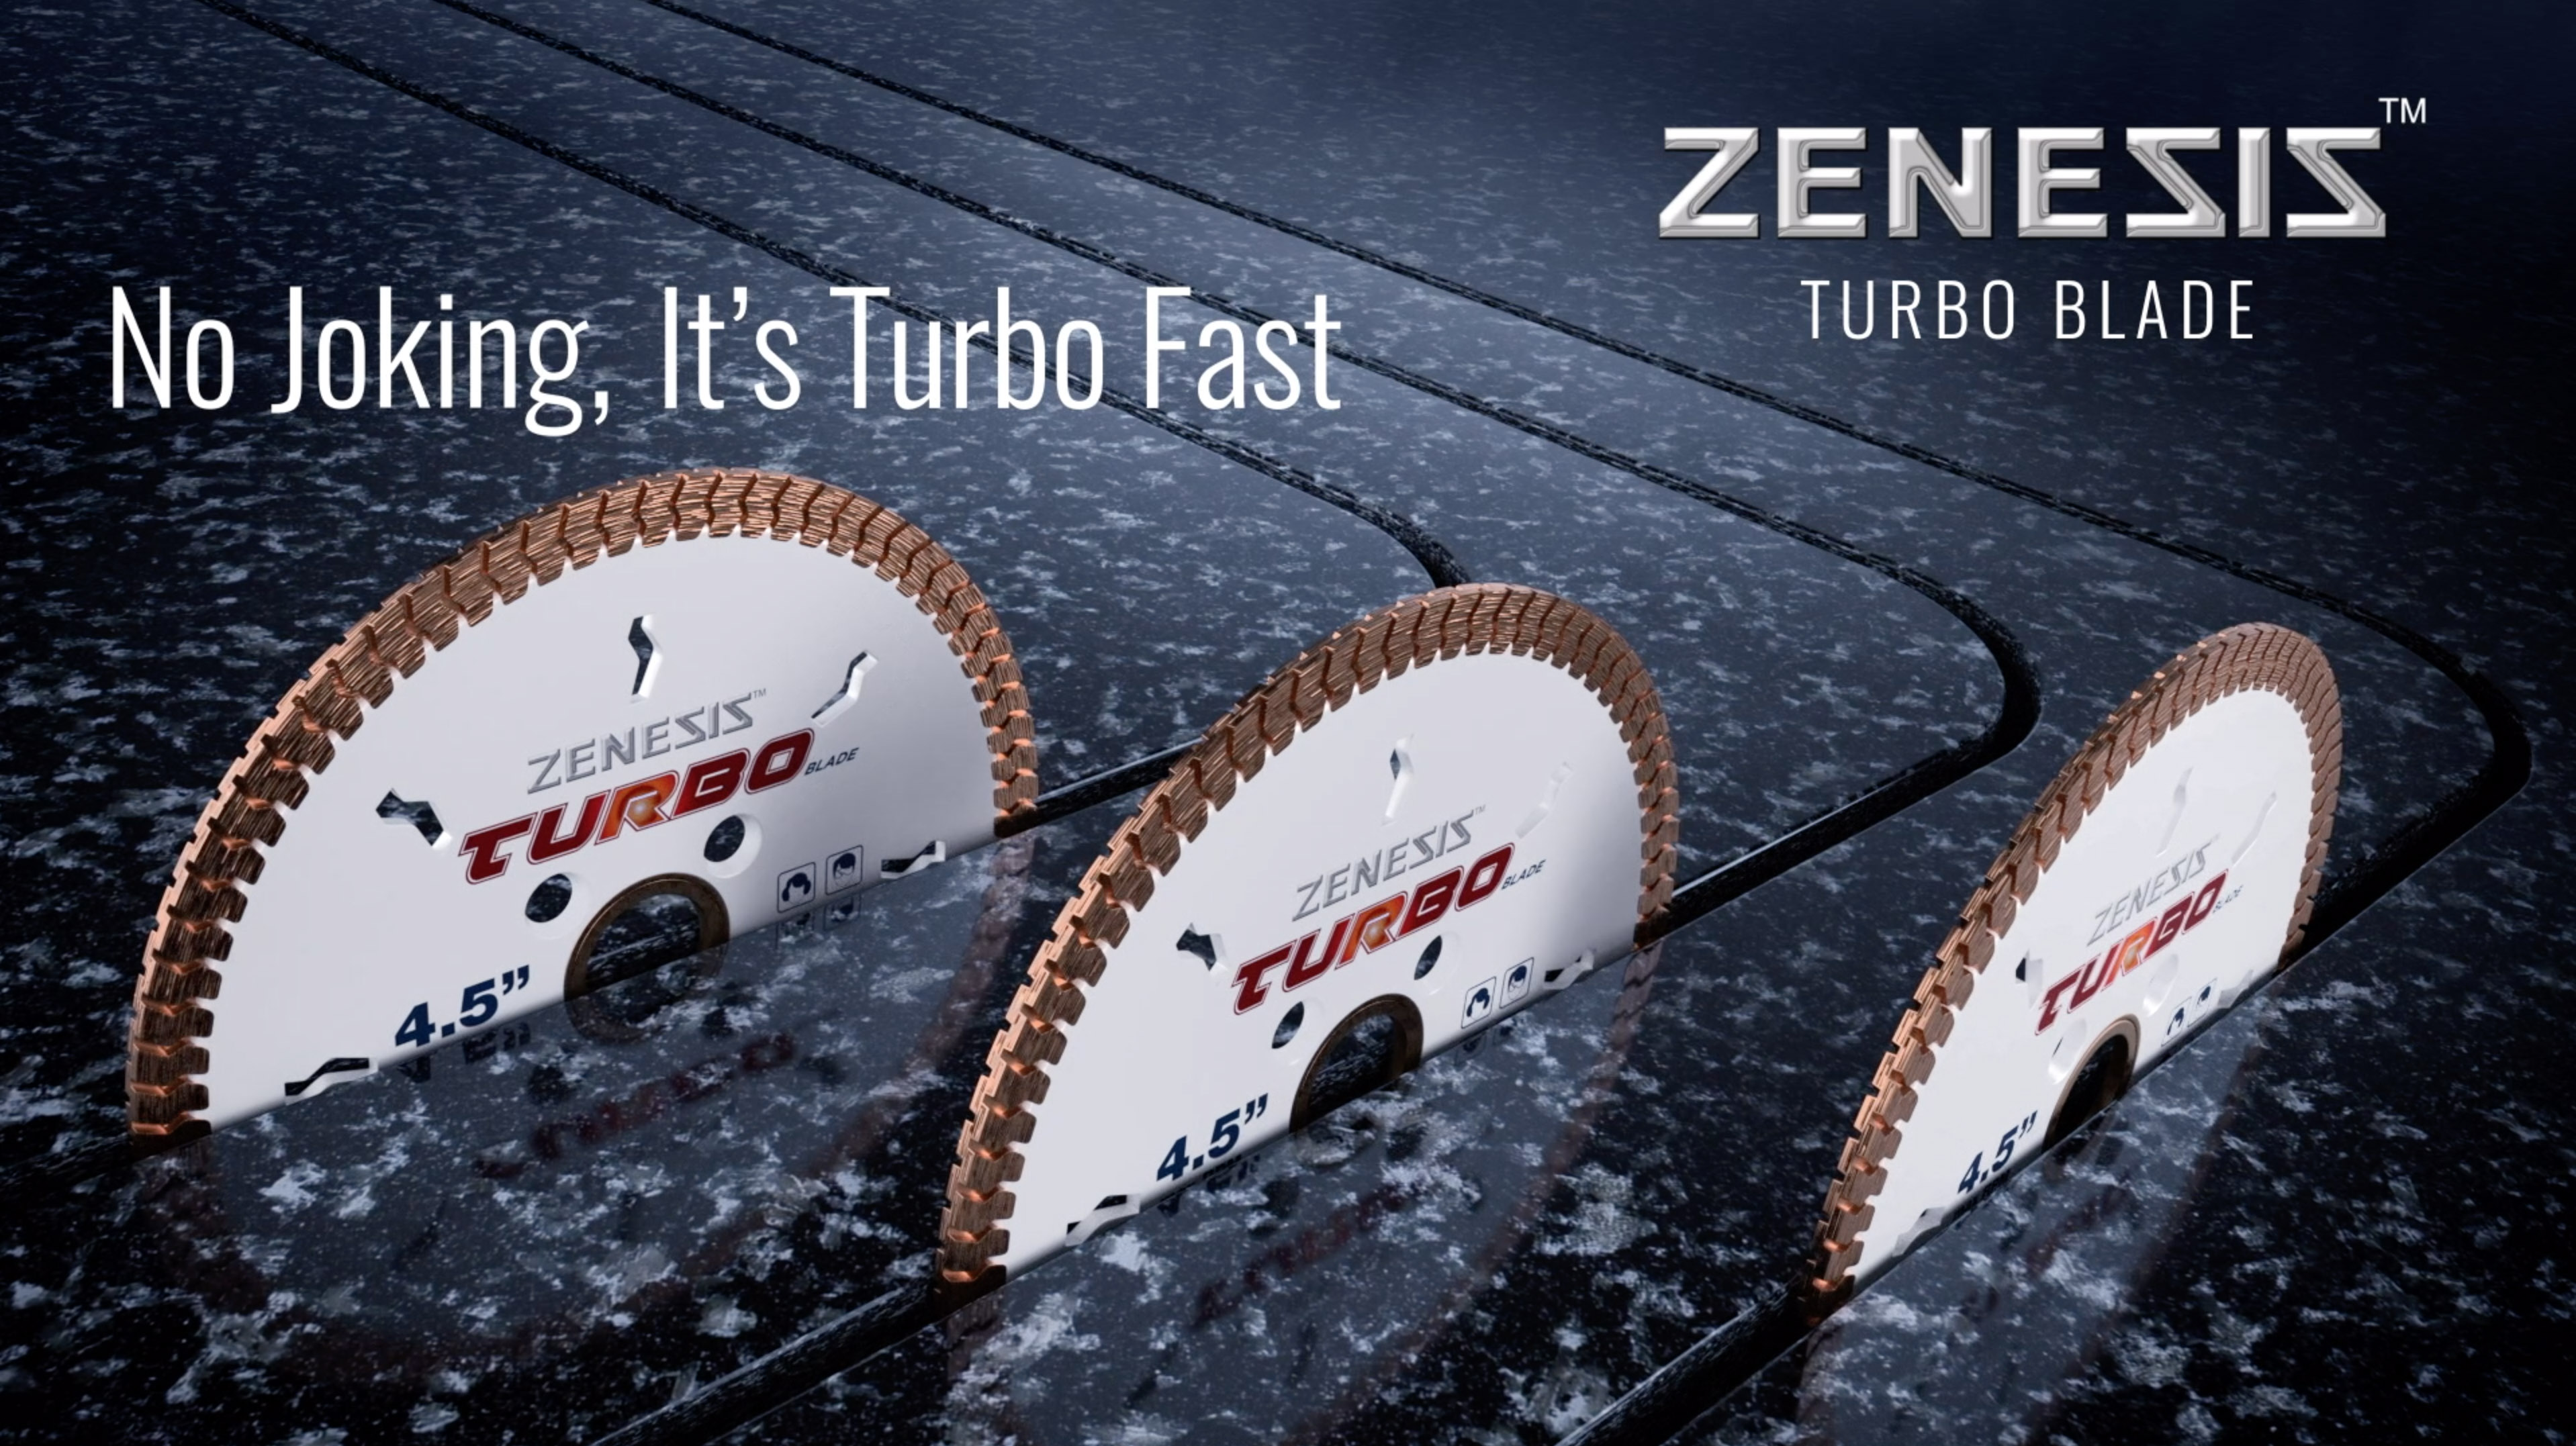 Zenesis Turbo Product shot